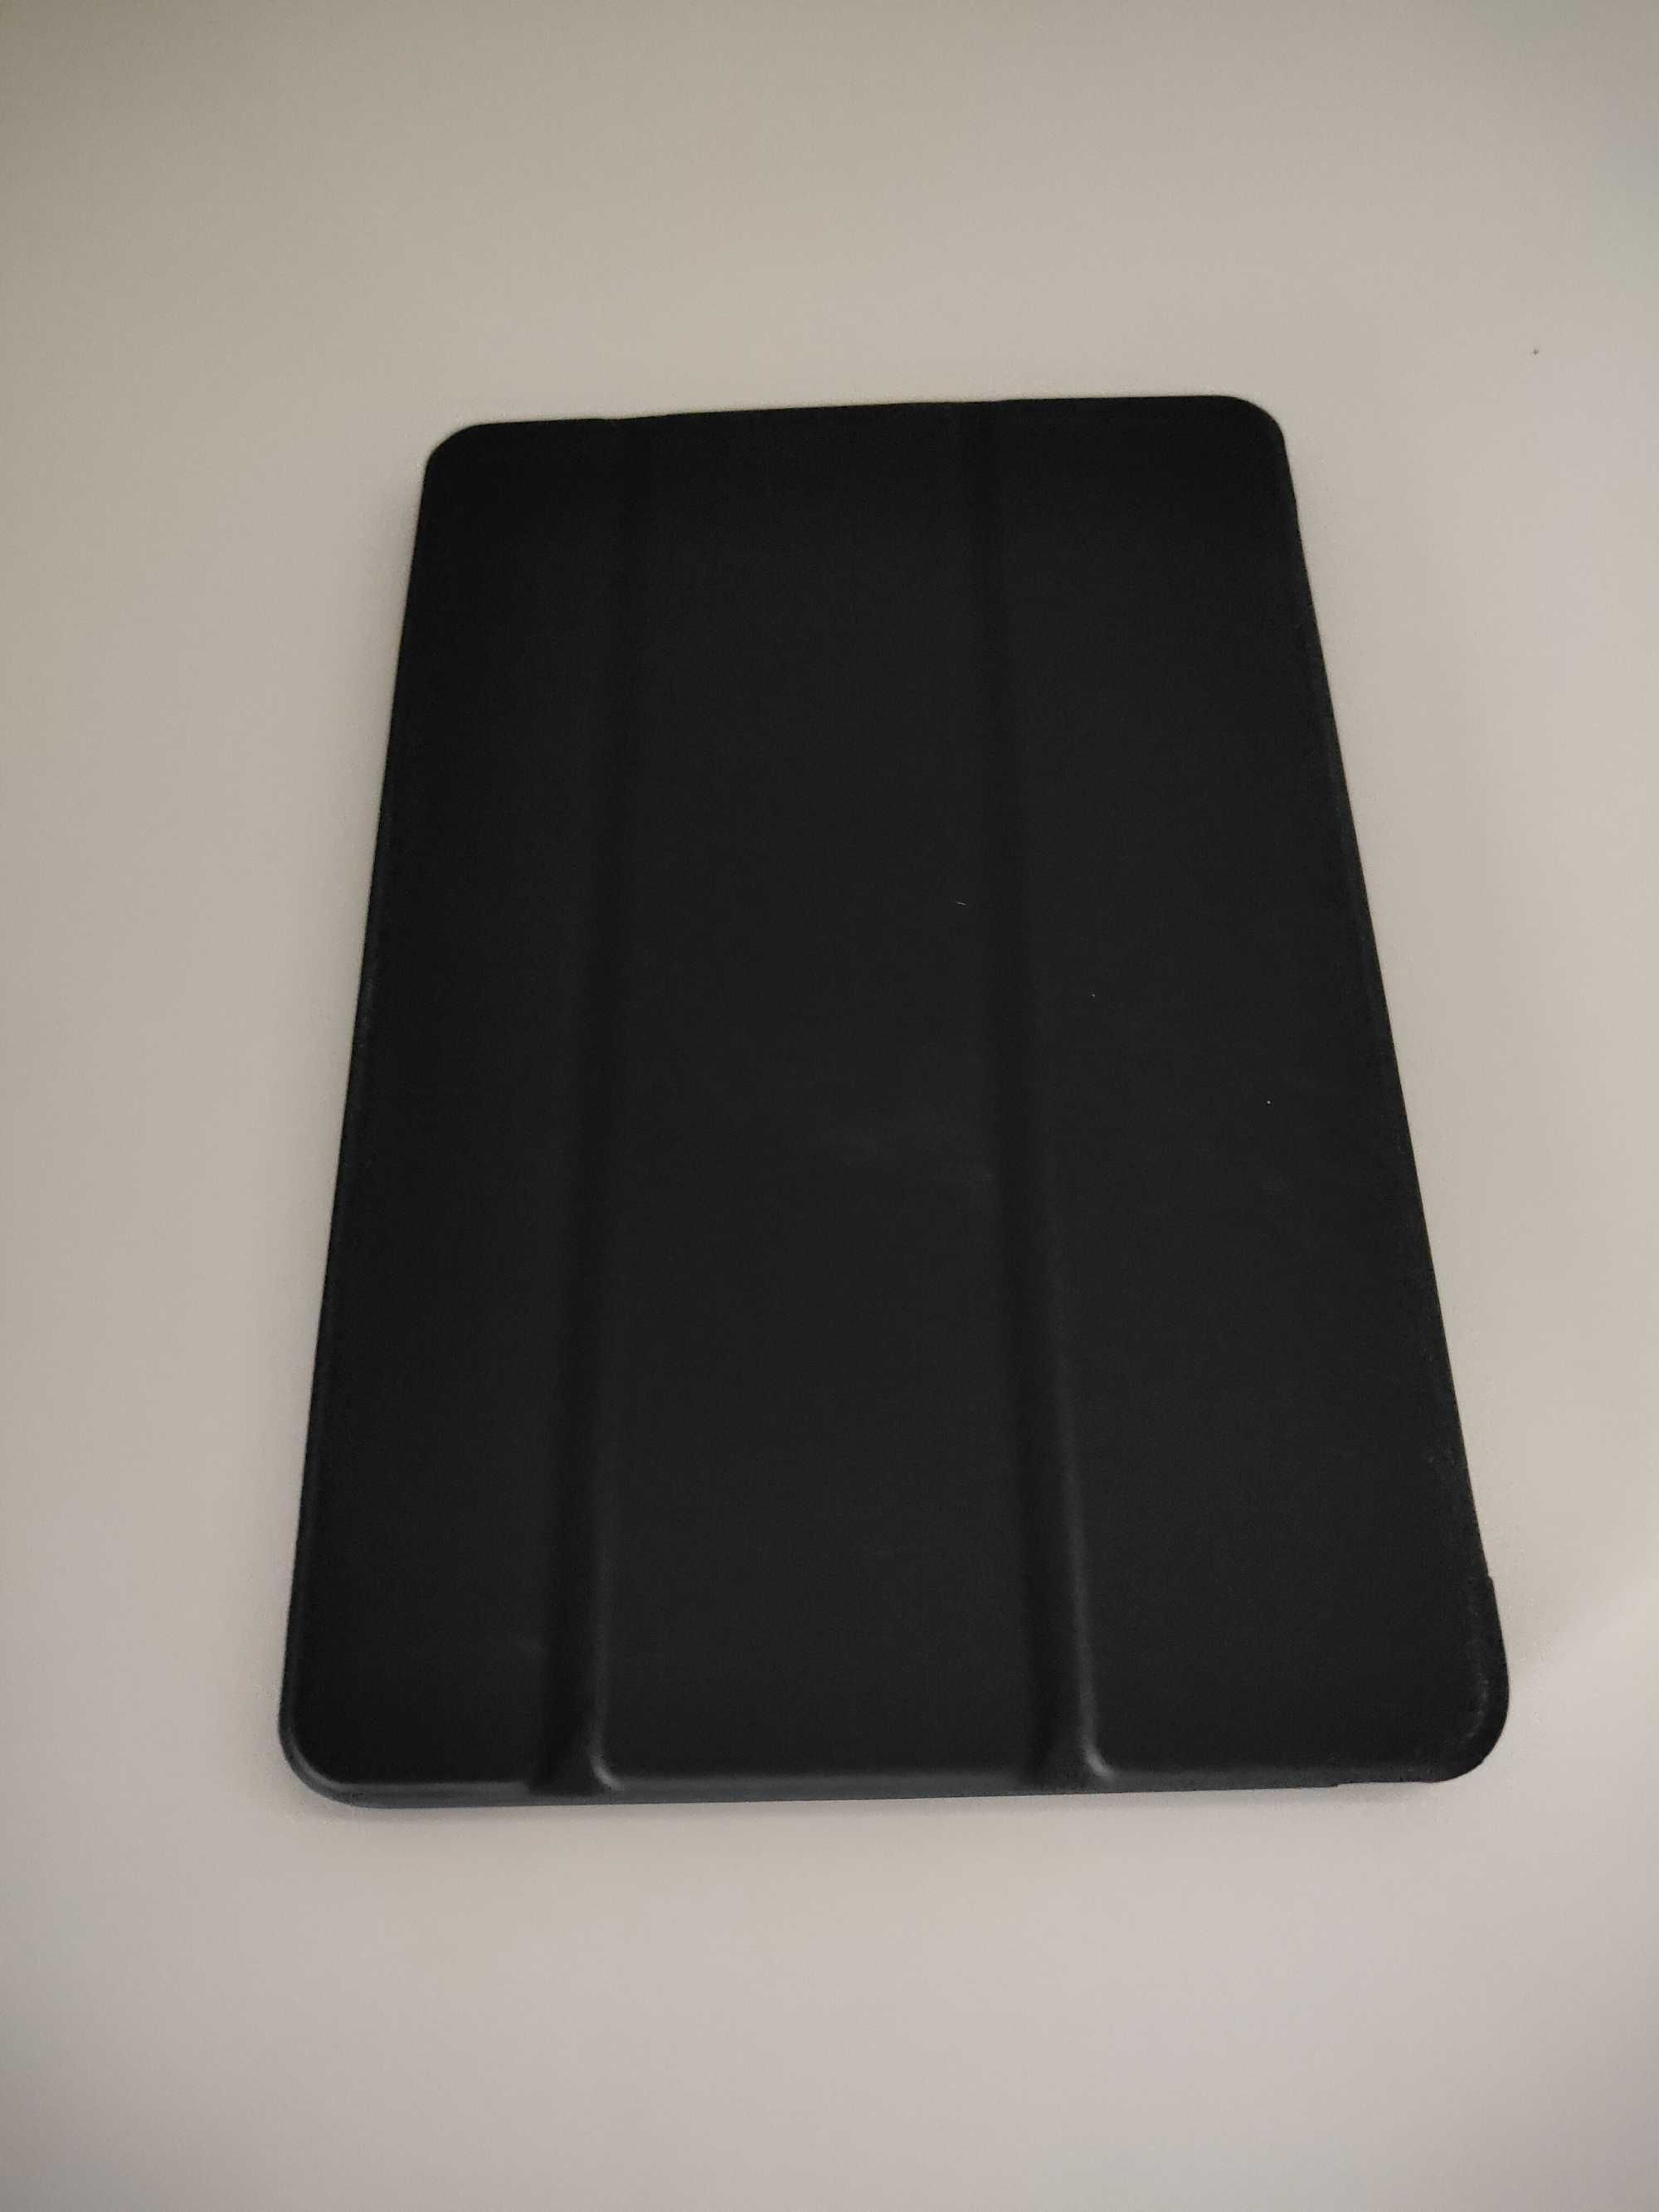 Capa iPad mini 5th generation